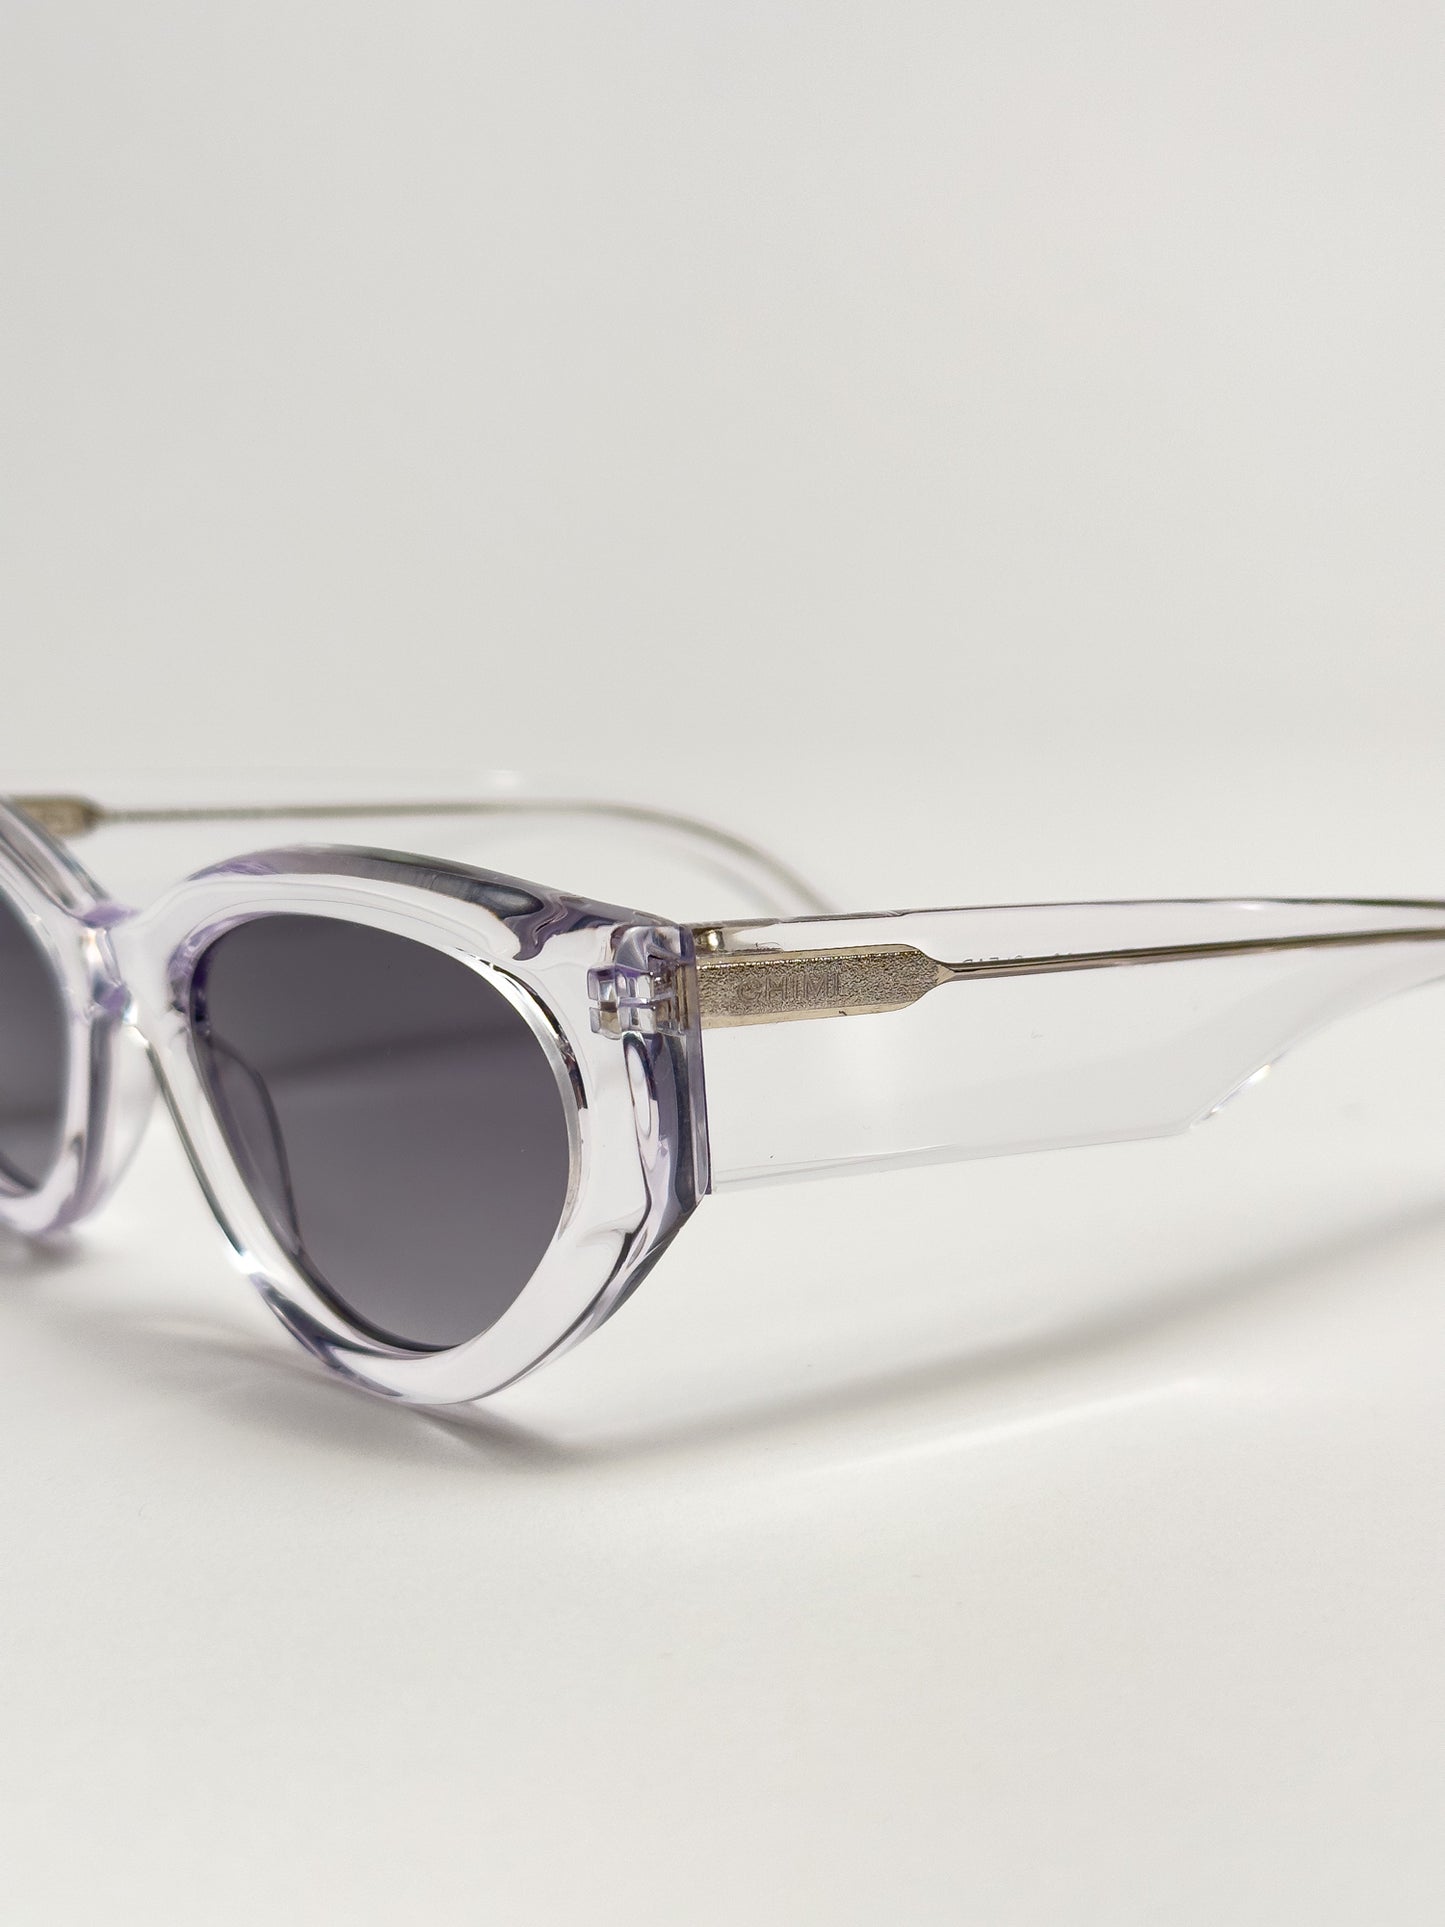 Sunglasses 06.2